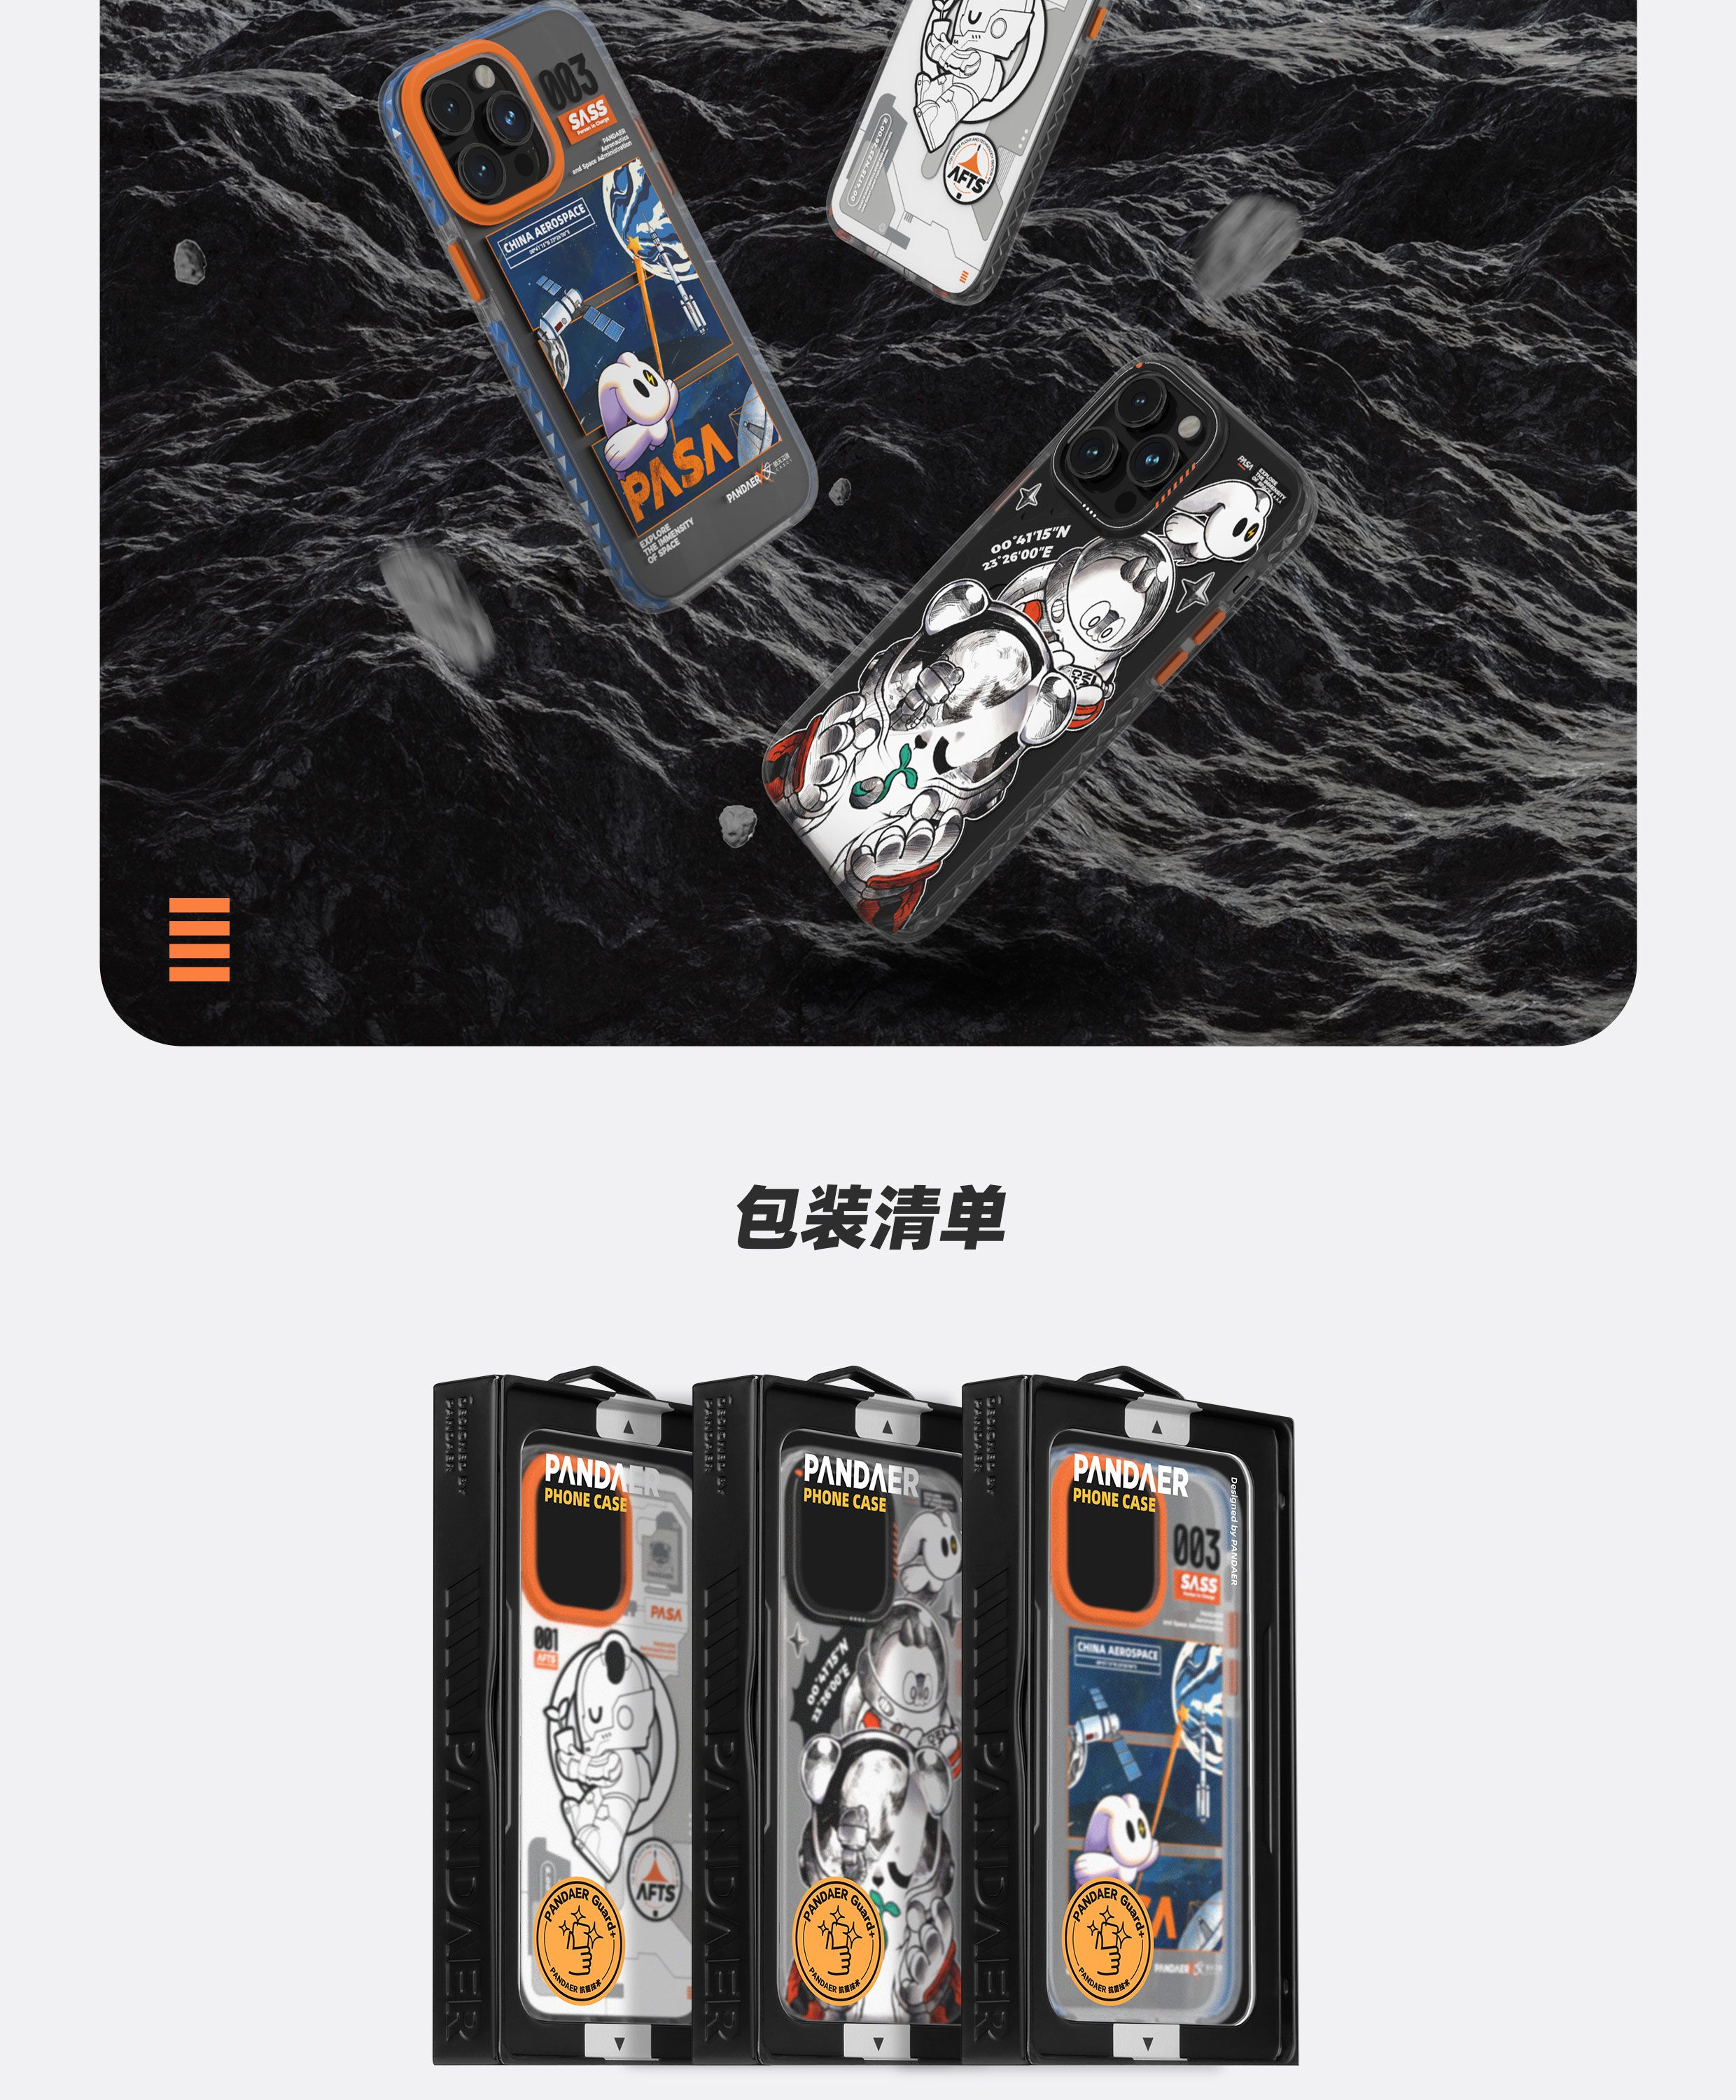 Meizu PANDAER PASA Case for iPhone 14 Pro Max